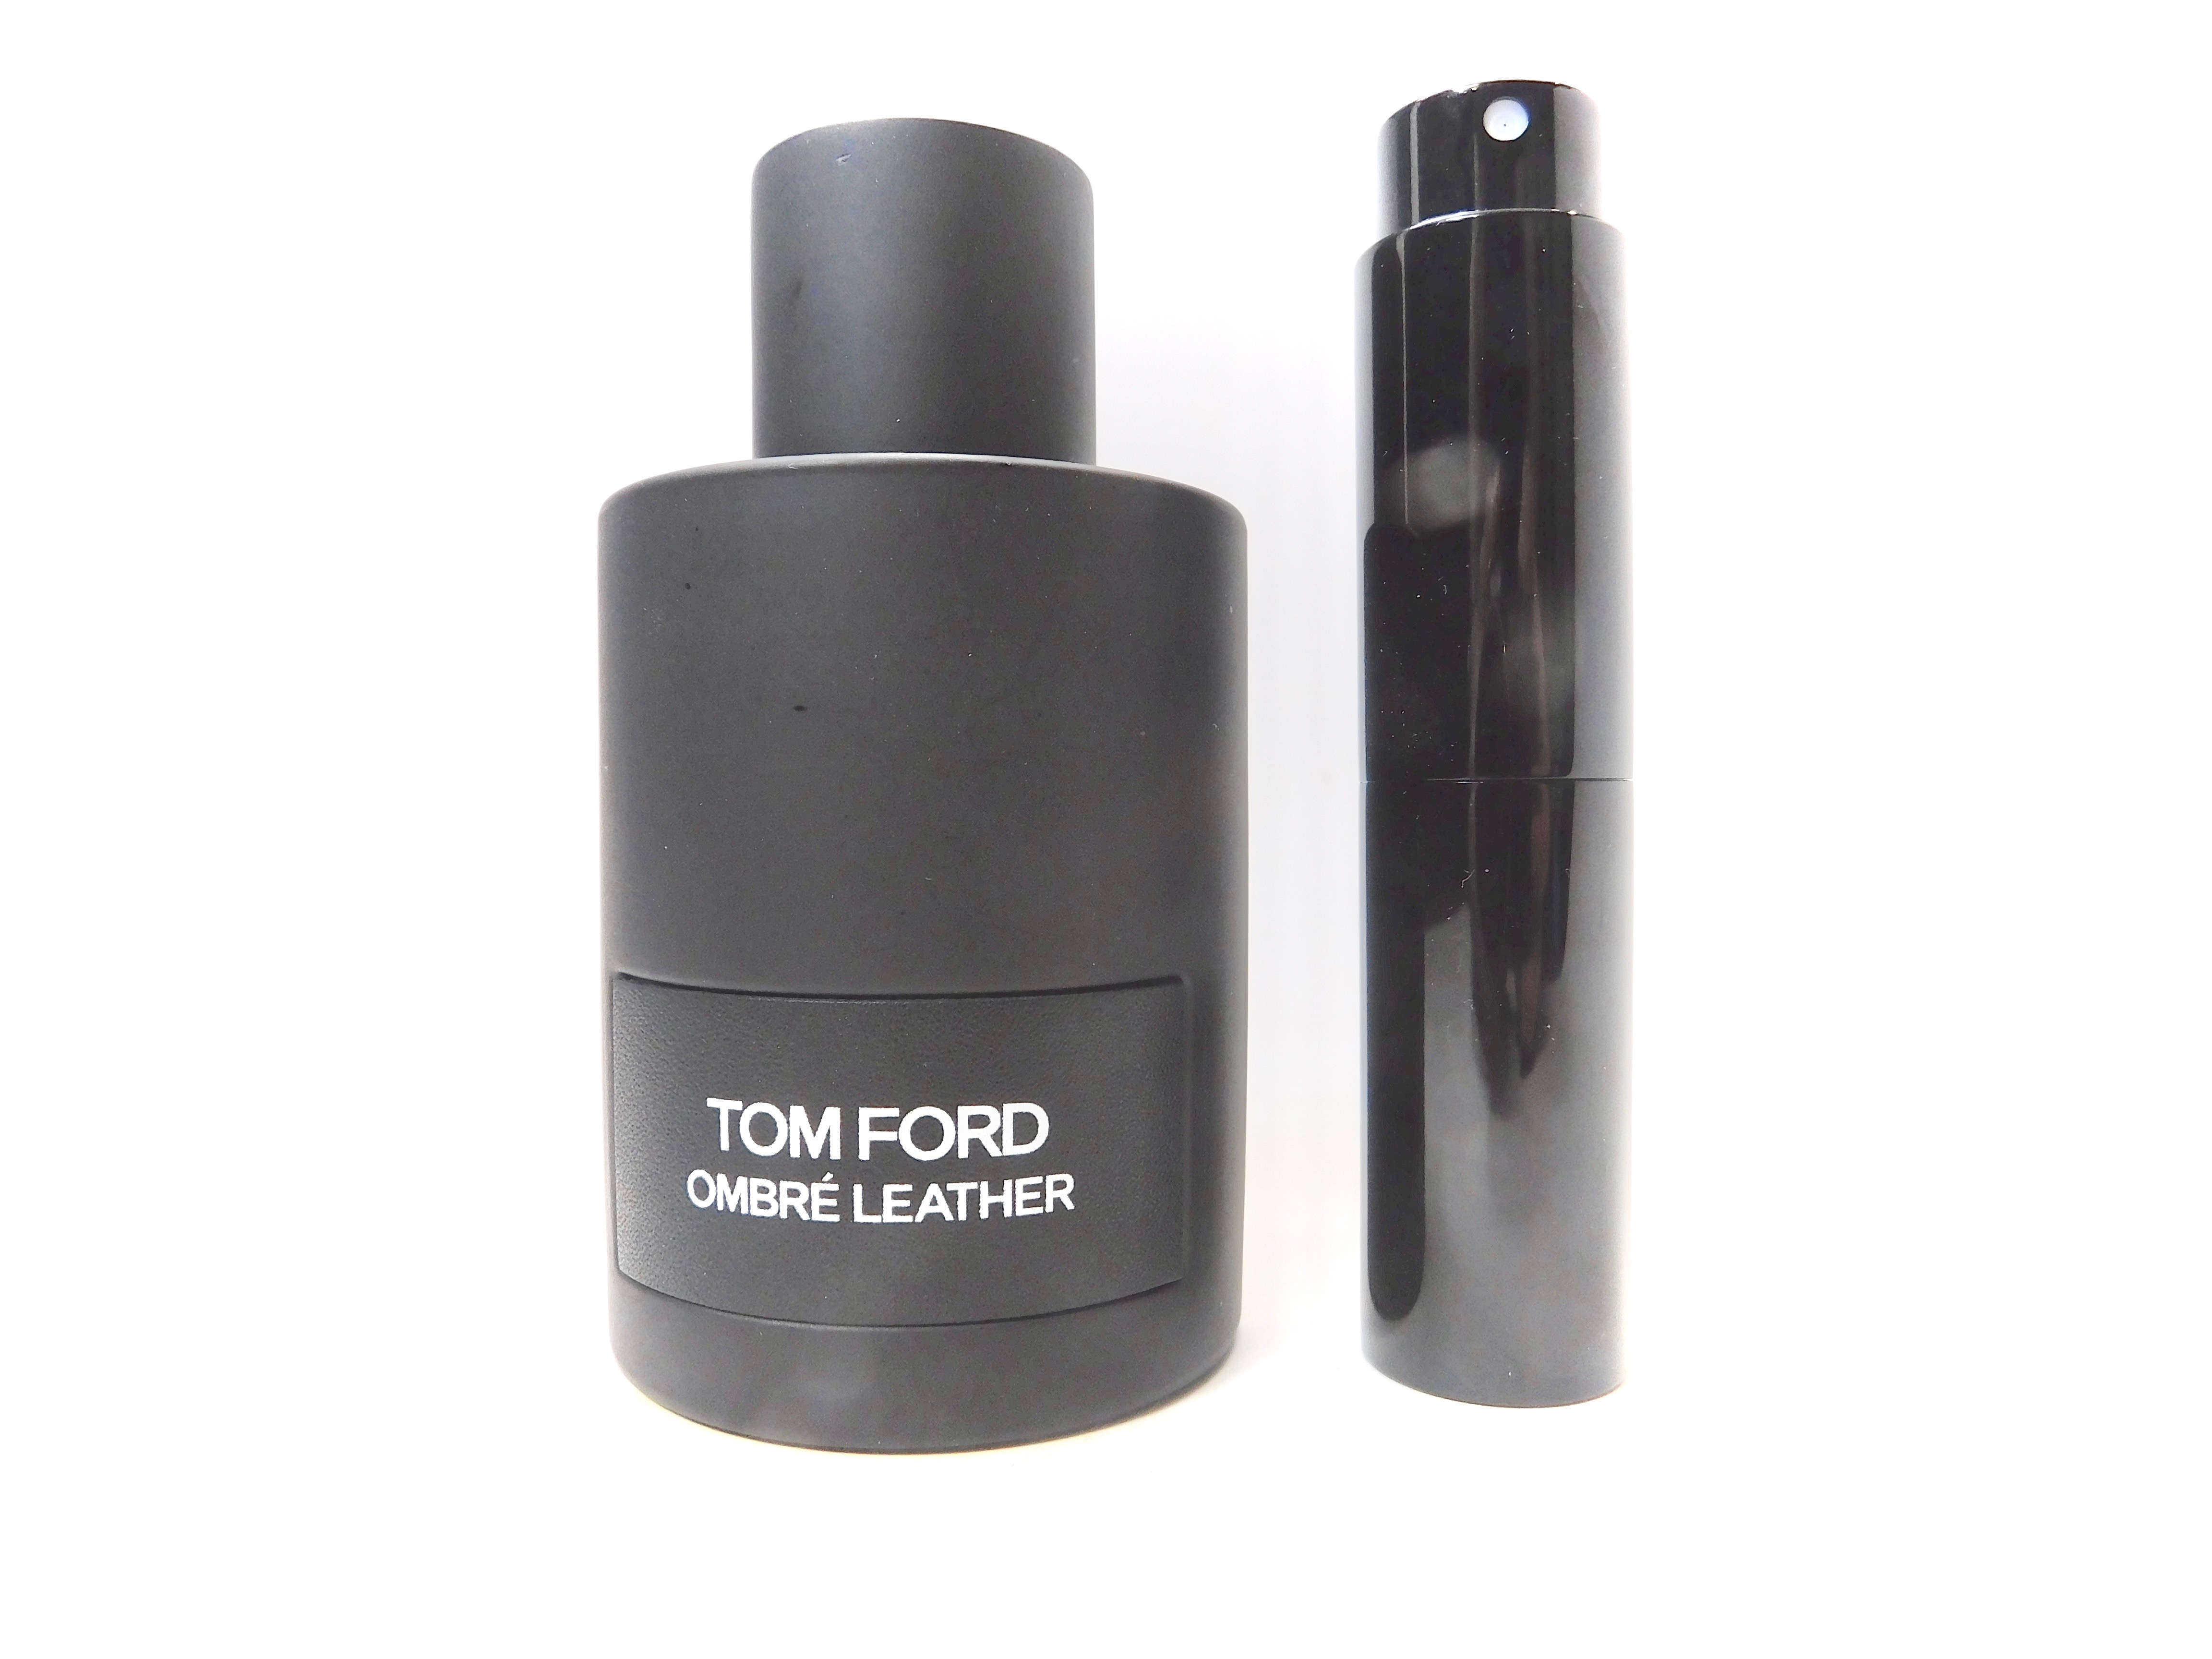 Tom Ford Ombre Leather Eau de Parfum Set with Travel Spray